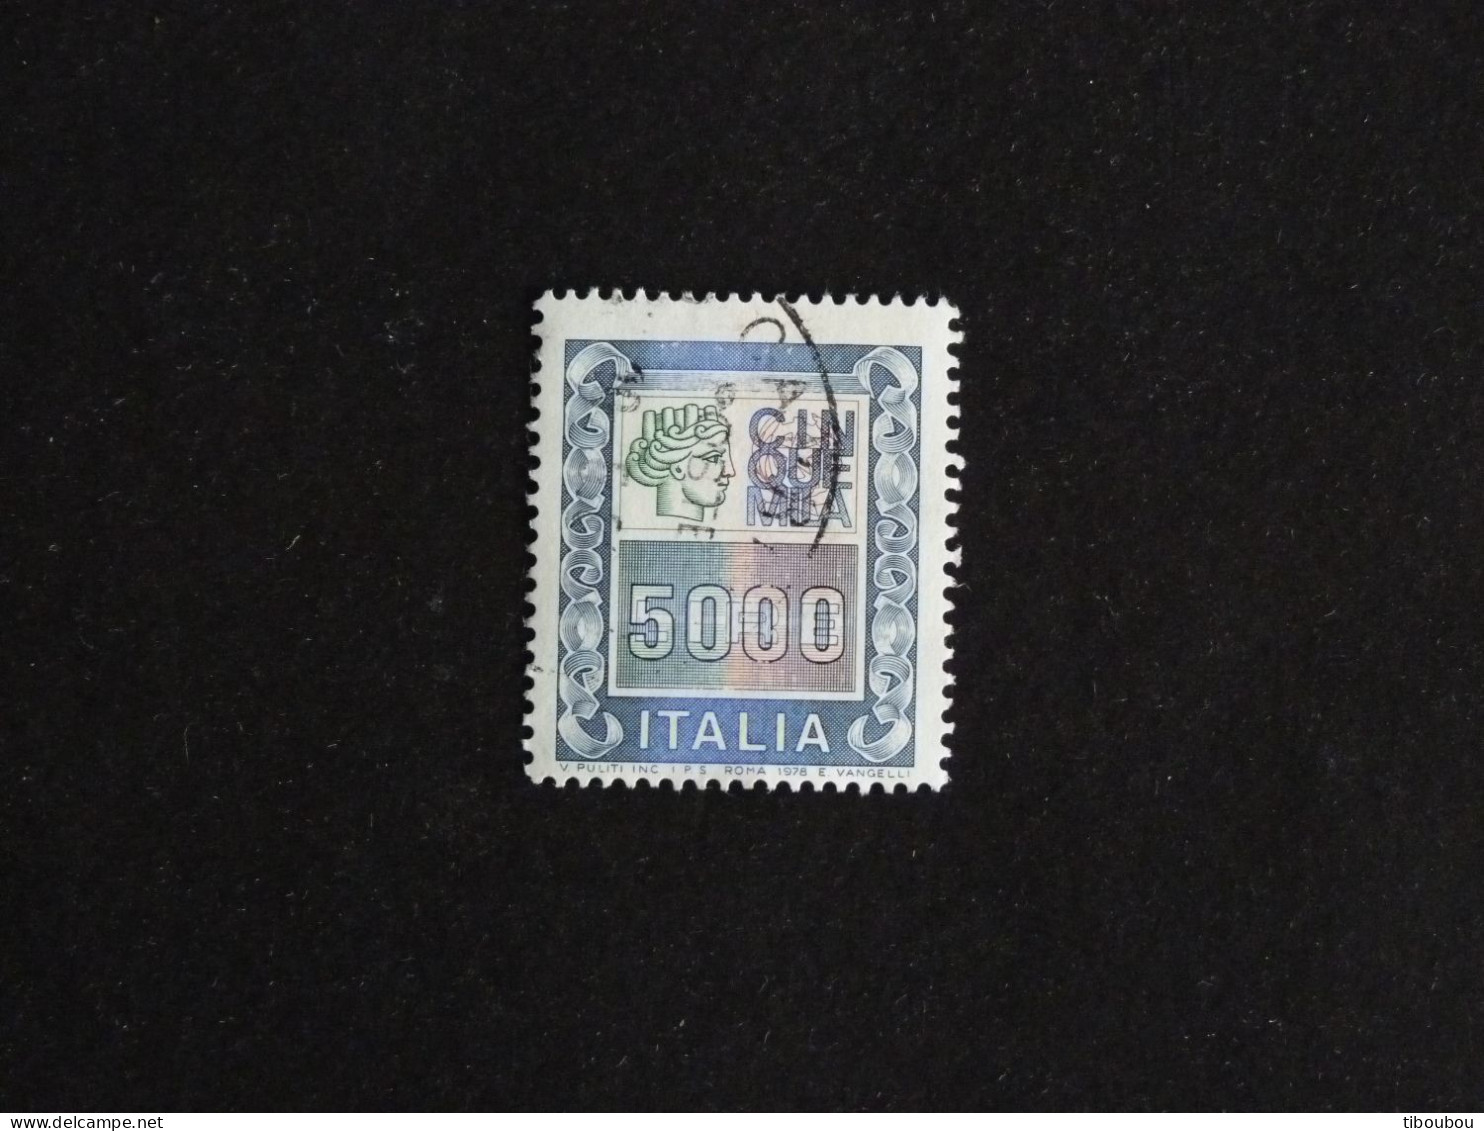 ITALIE ITALIA YT 1371 OBLITERE - SERIE COURANTE MONNAIE SYRACUSAINE - 1971-80: Usati